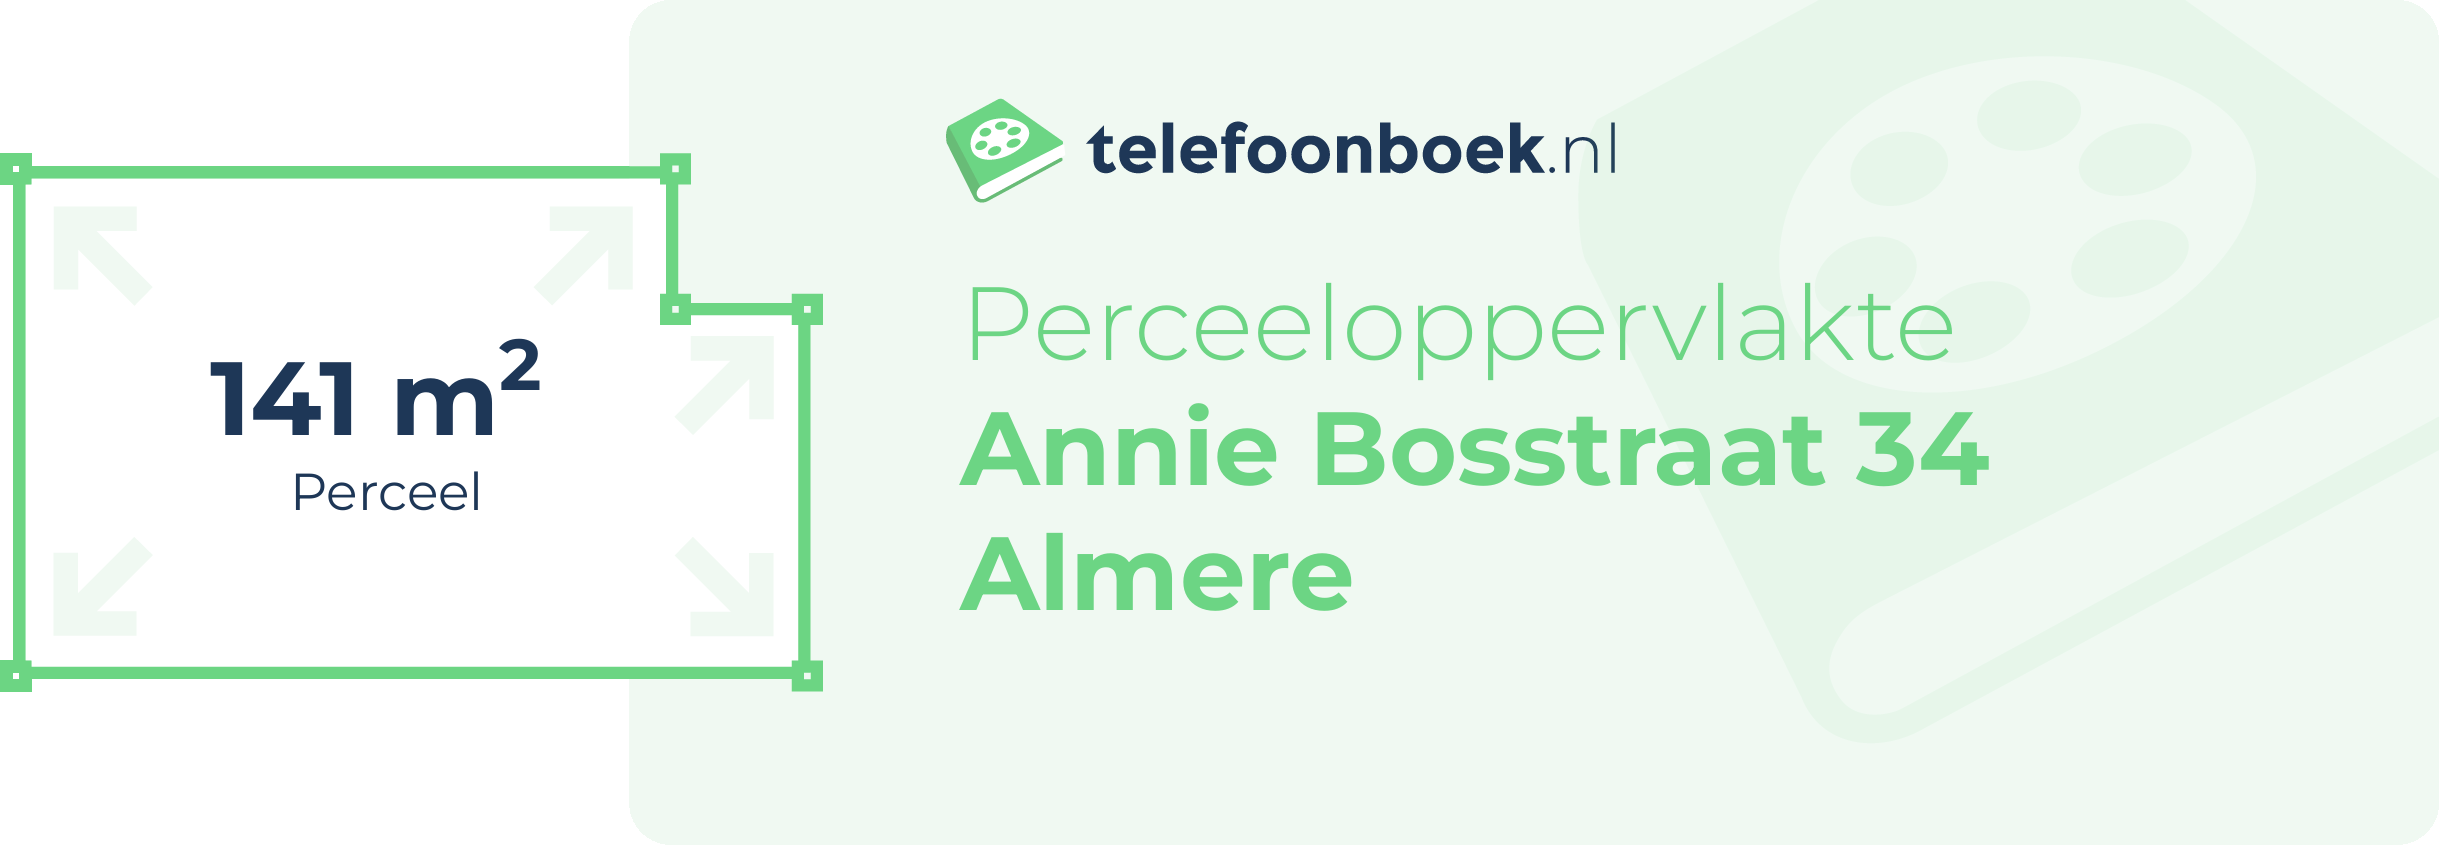 Perceeloppervlakte Annie Bosstraat 34 Almere